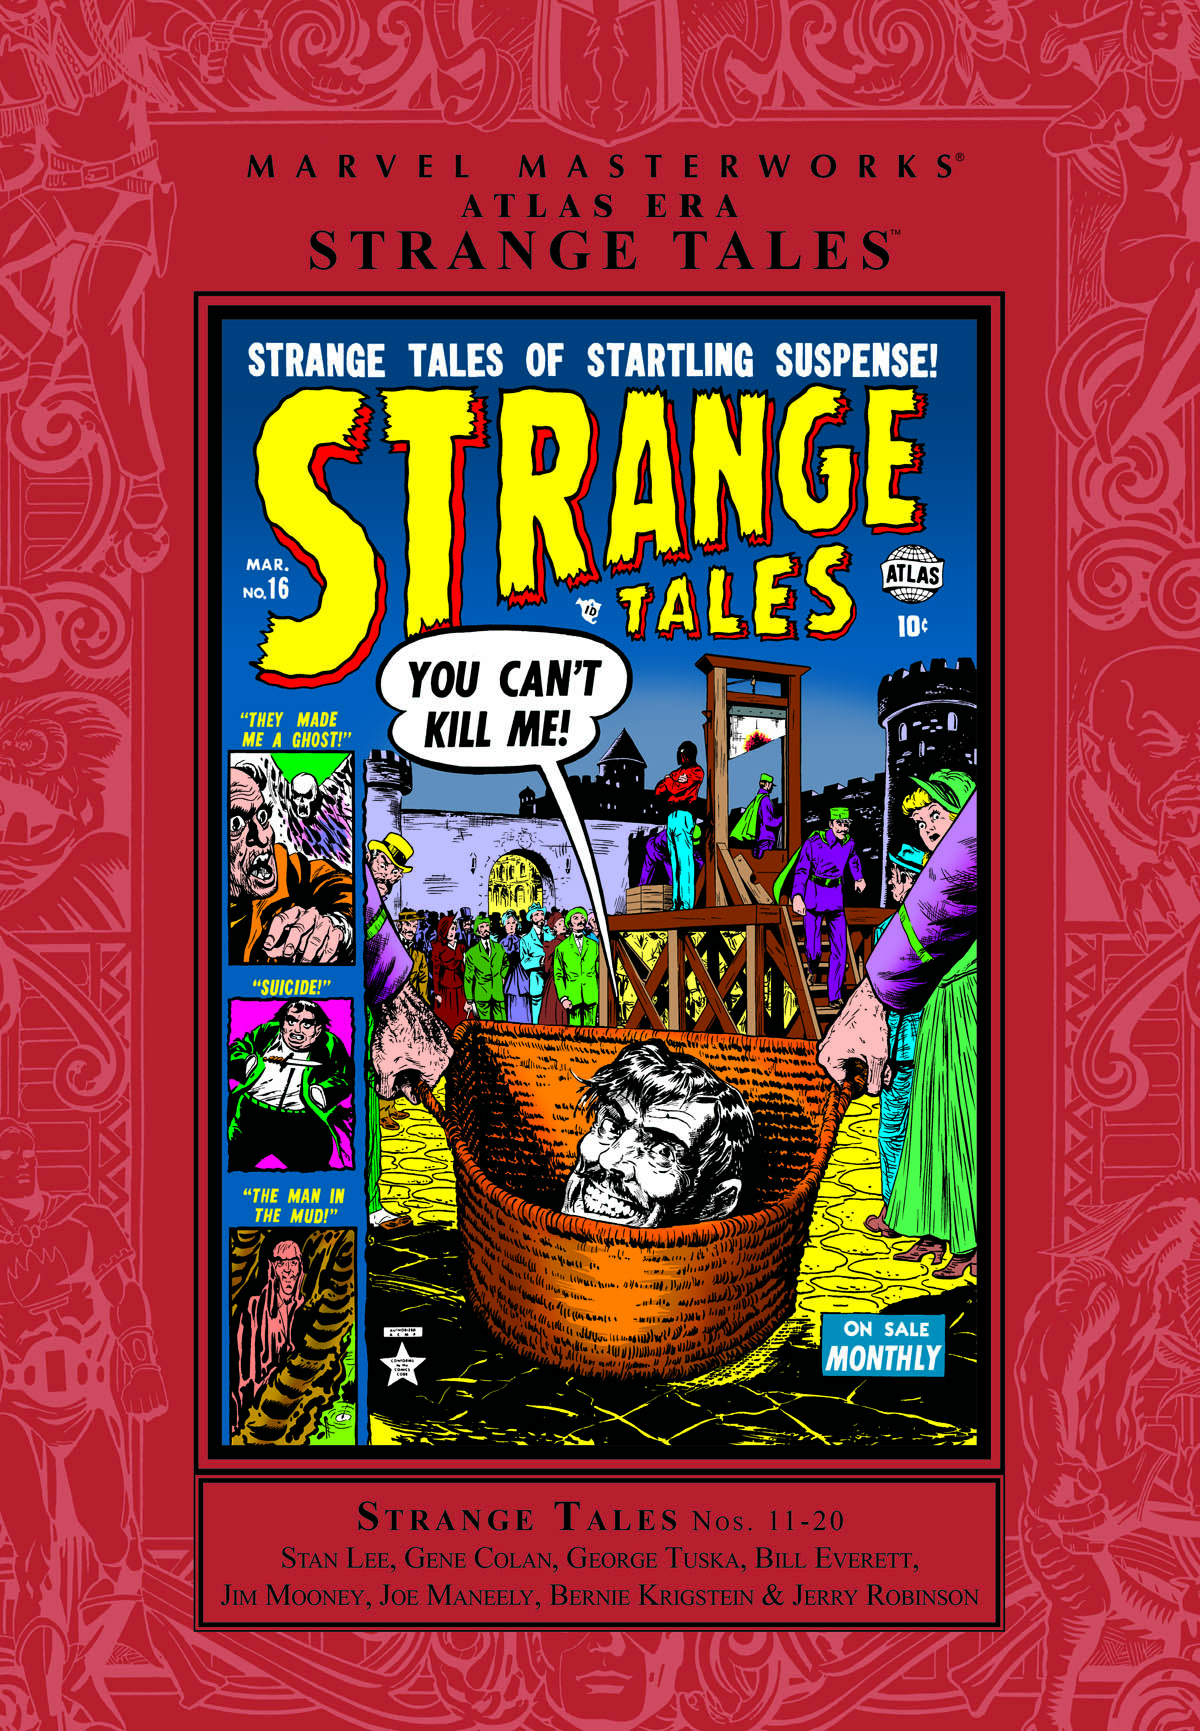 MARVEL MASTERWORKS: ATLAS ERA STRANGE TALES VOL. 2 HC (Trade Paperback)